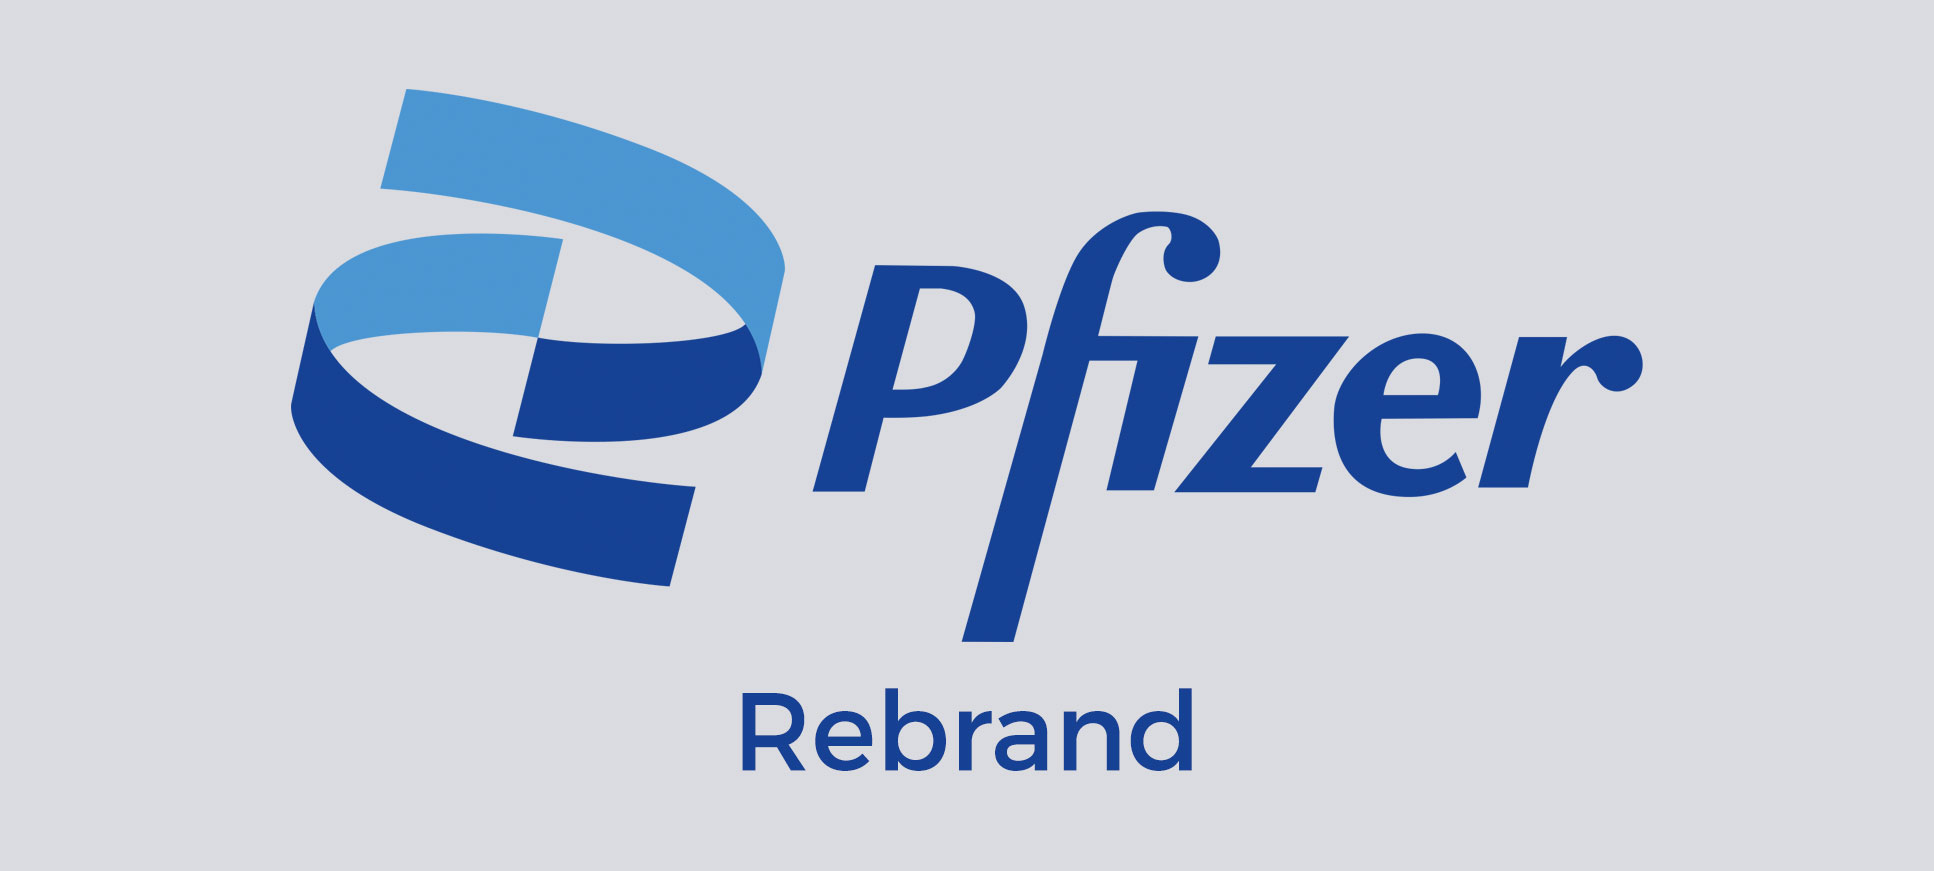 Pfizer Rebrand - Design Relax